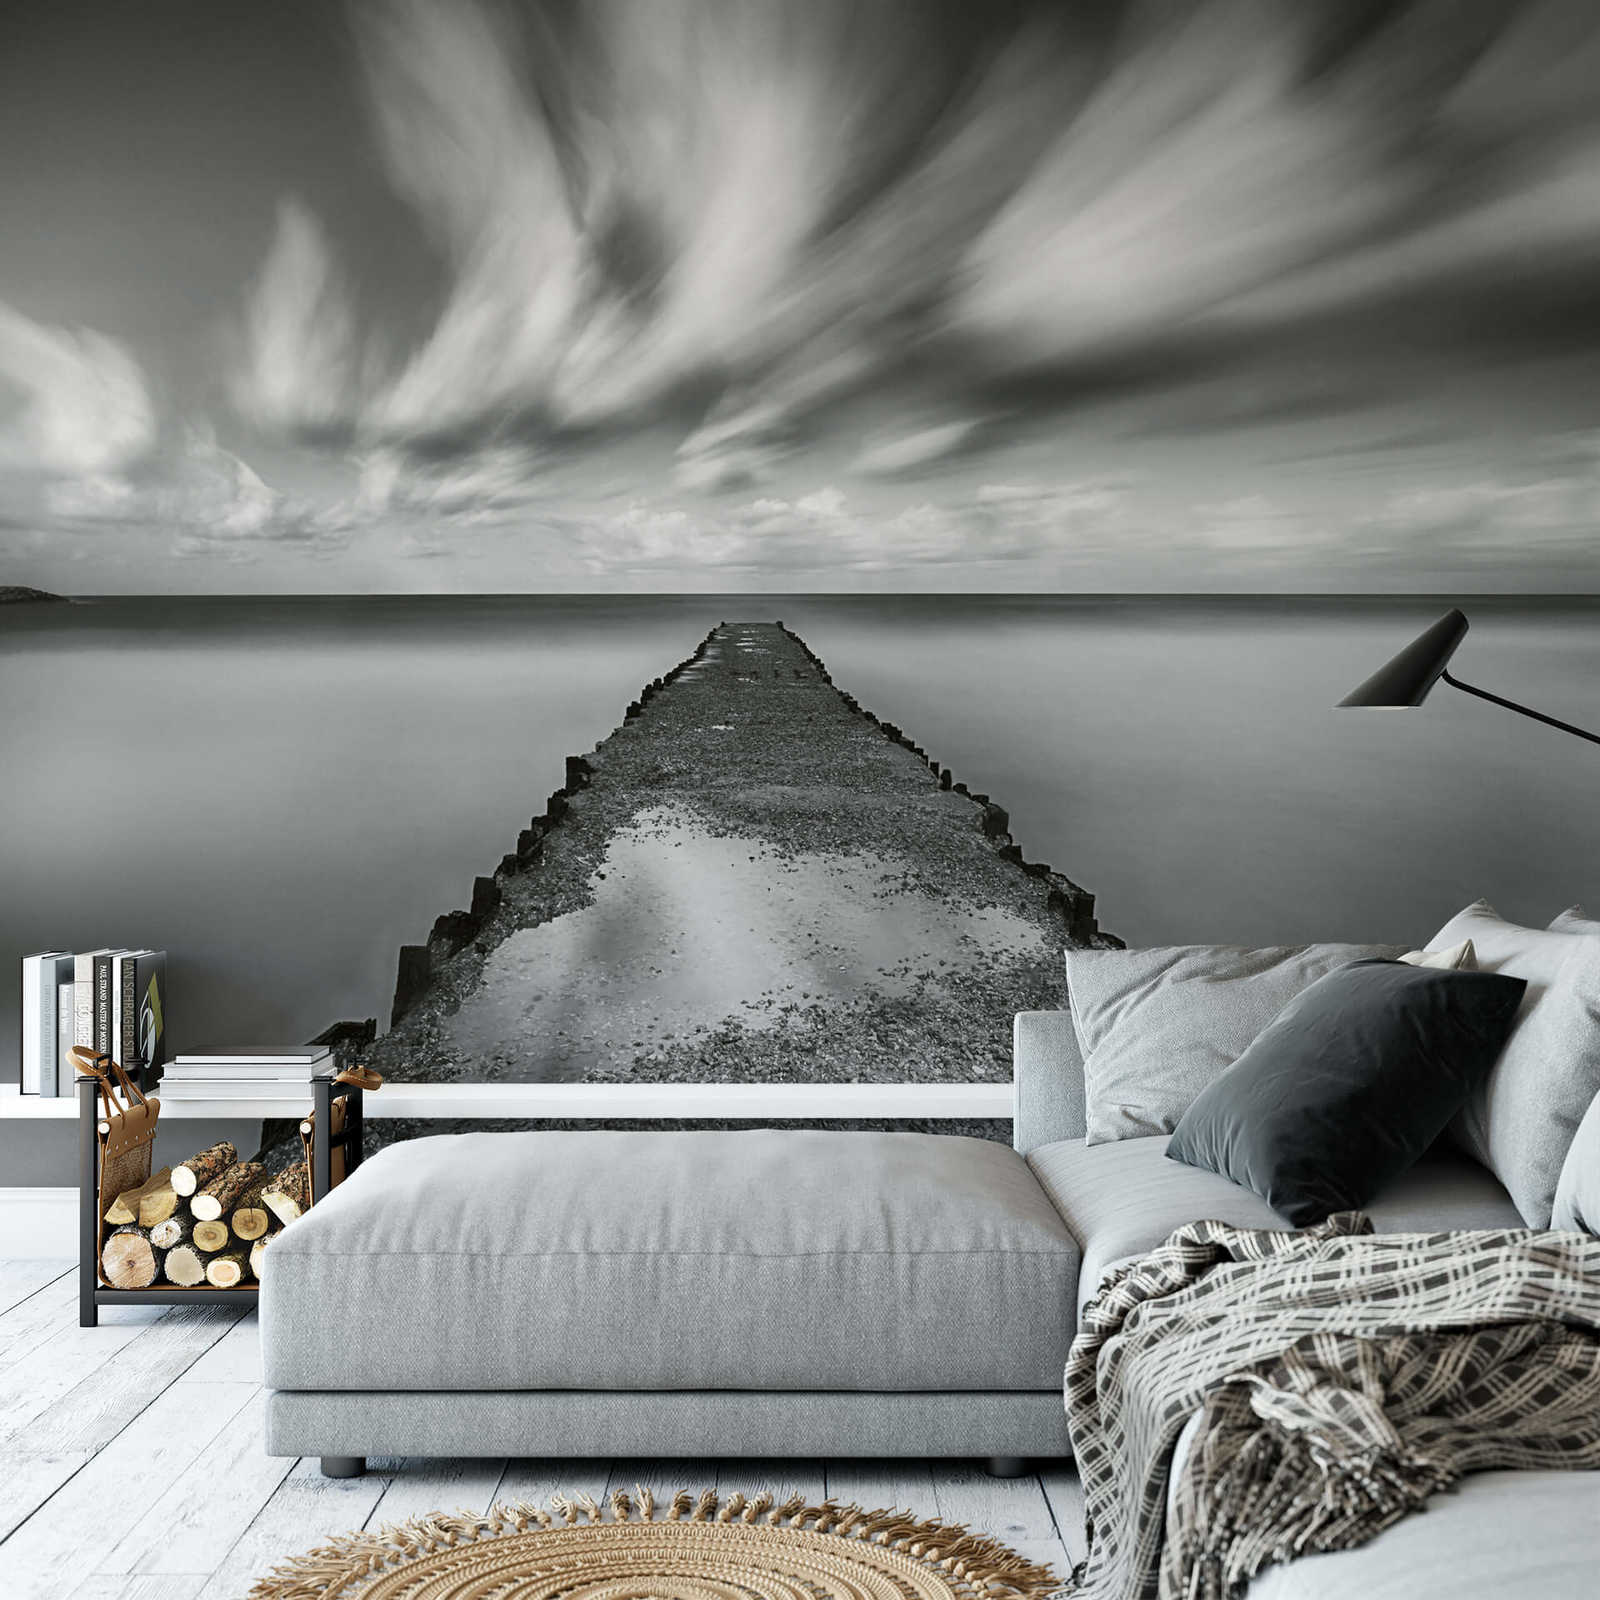             Photo wallpaper sea with jetty - black, white, grey
        